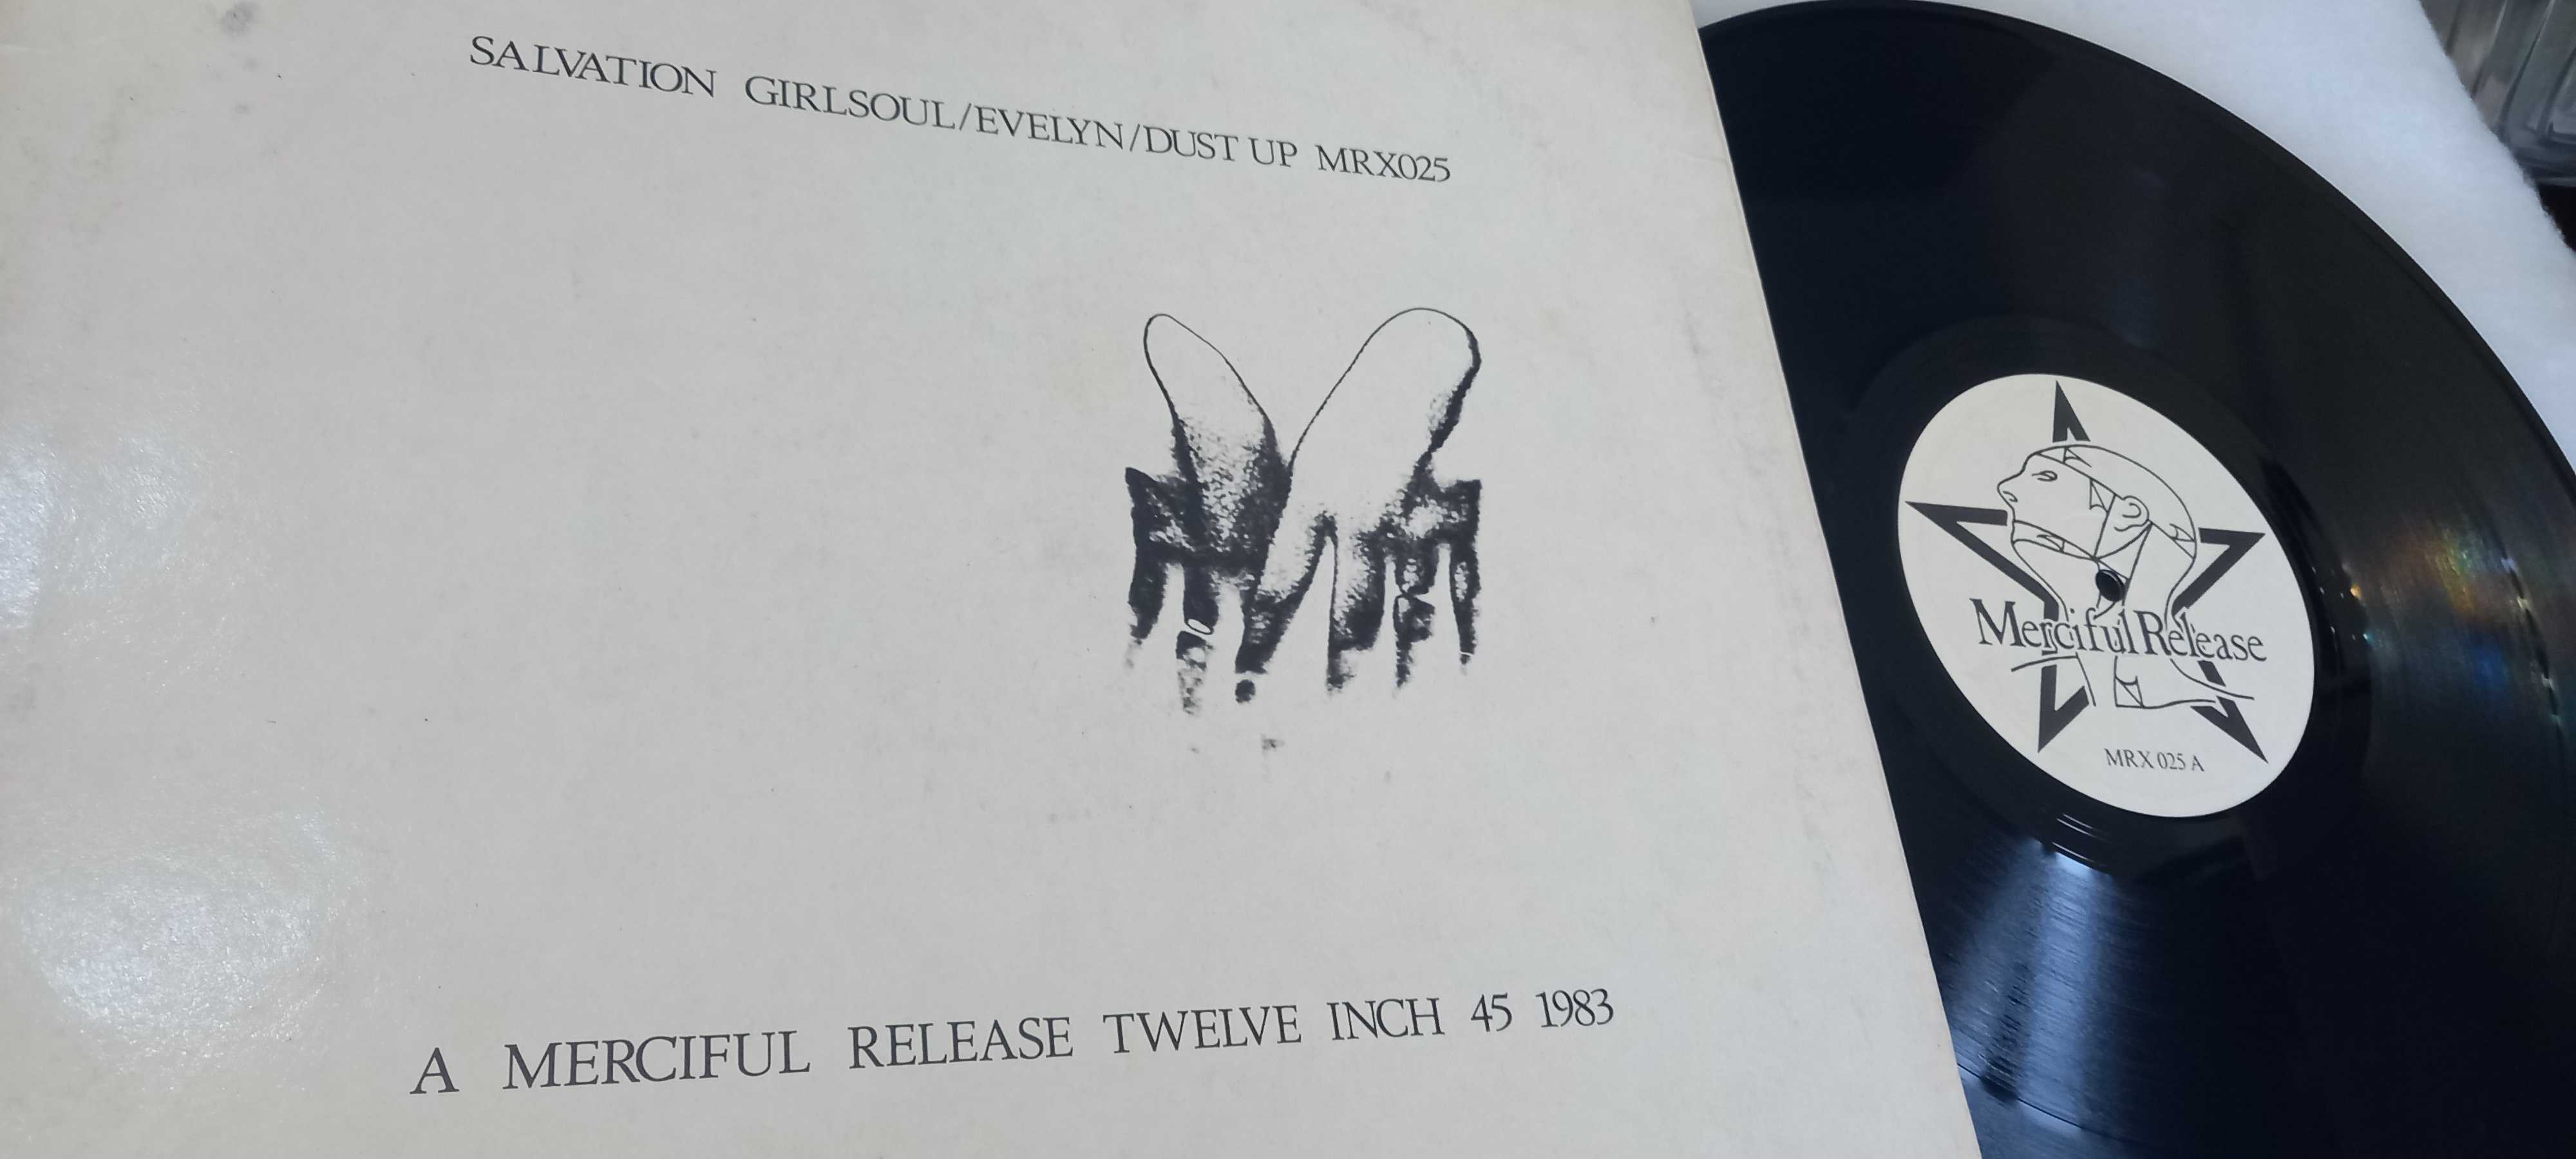 Salvation – Girlsoul Maxi 12" Raro Gótico 1983 Sisters of Mercy